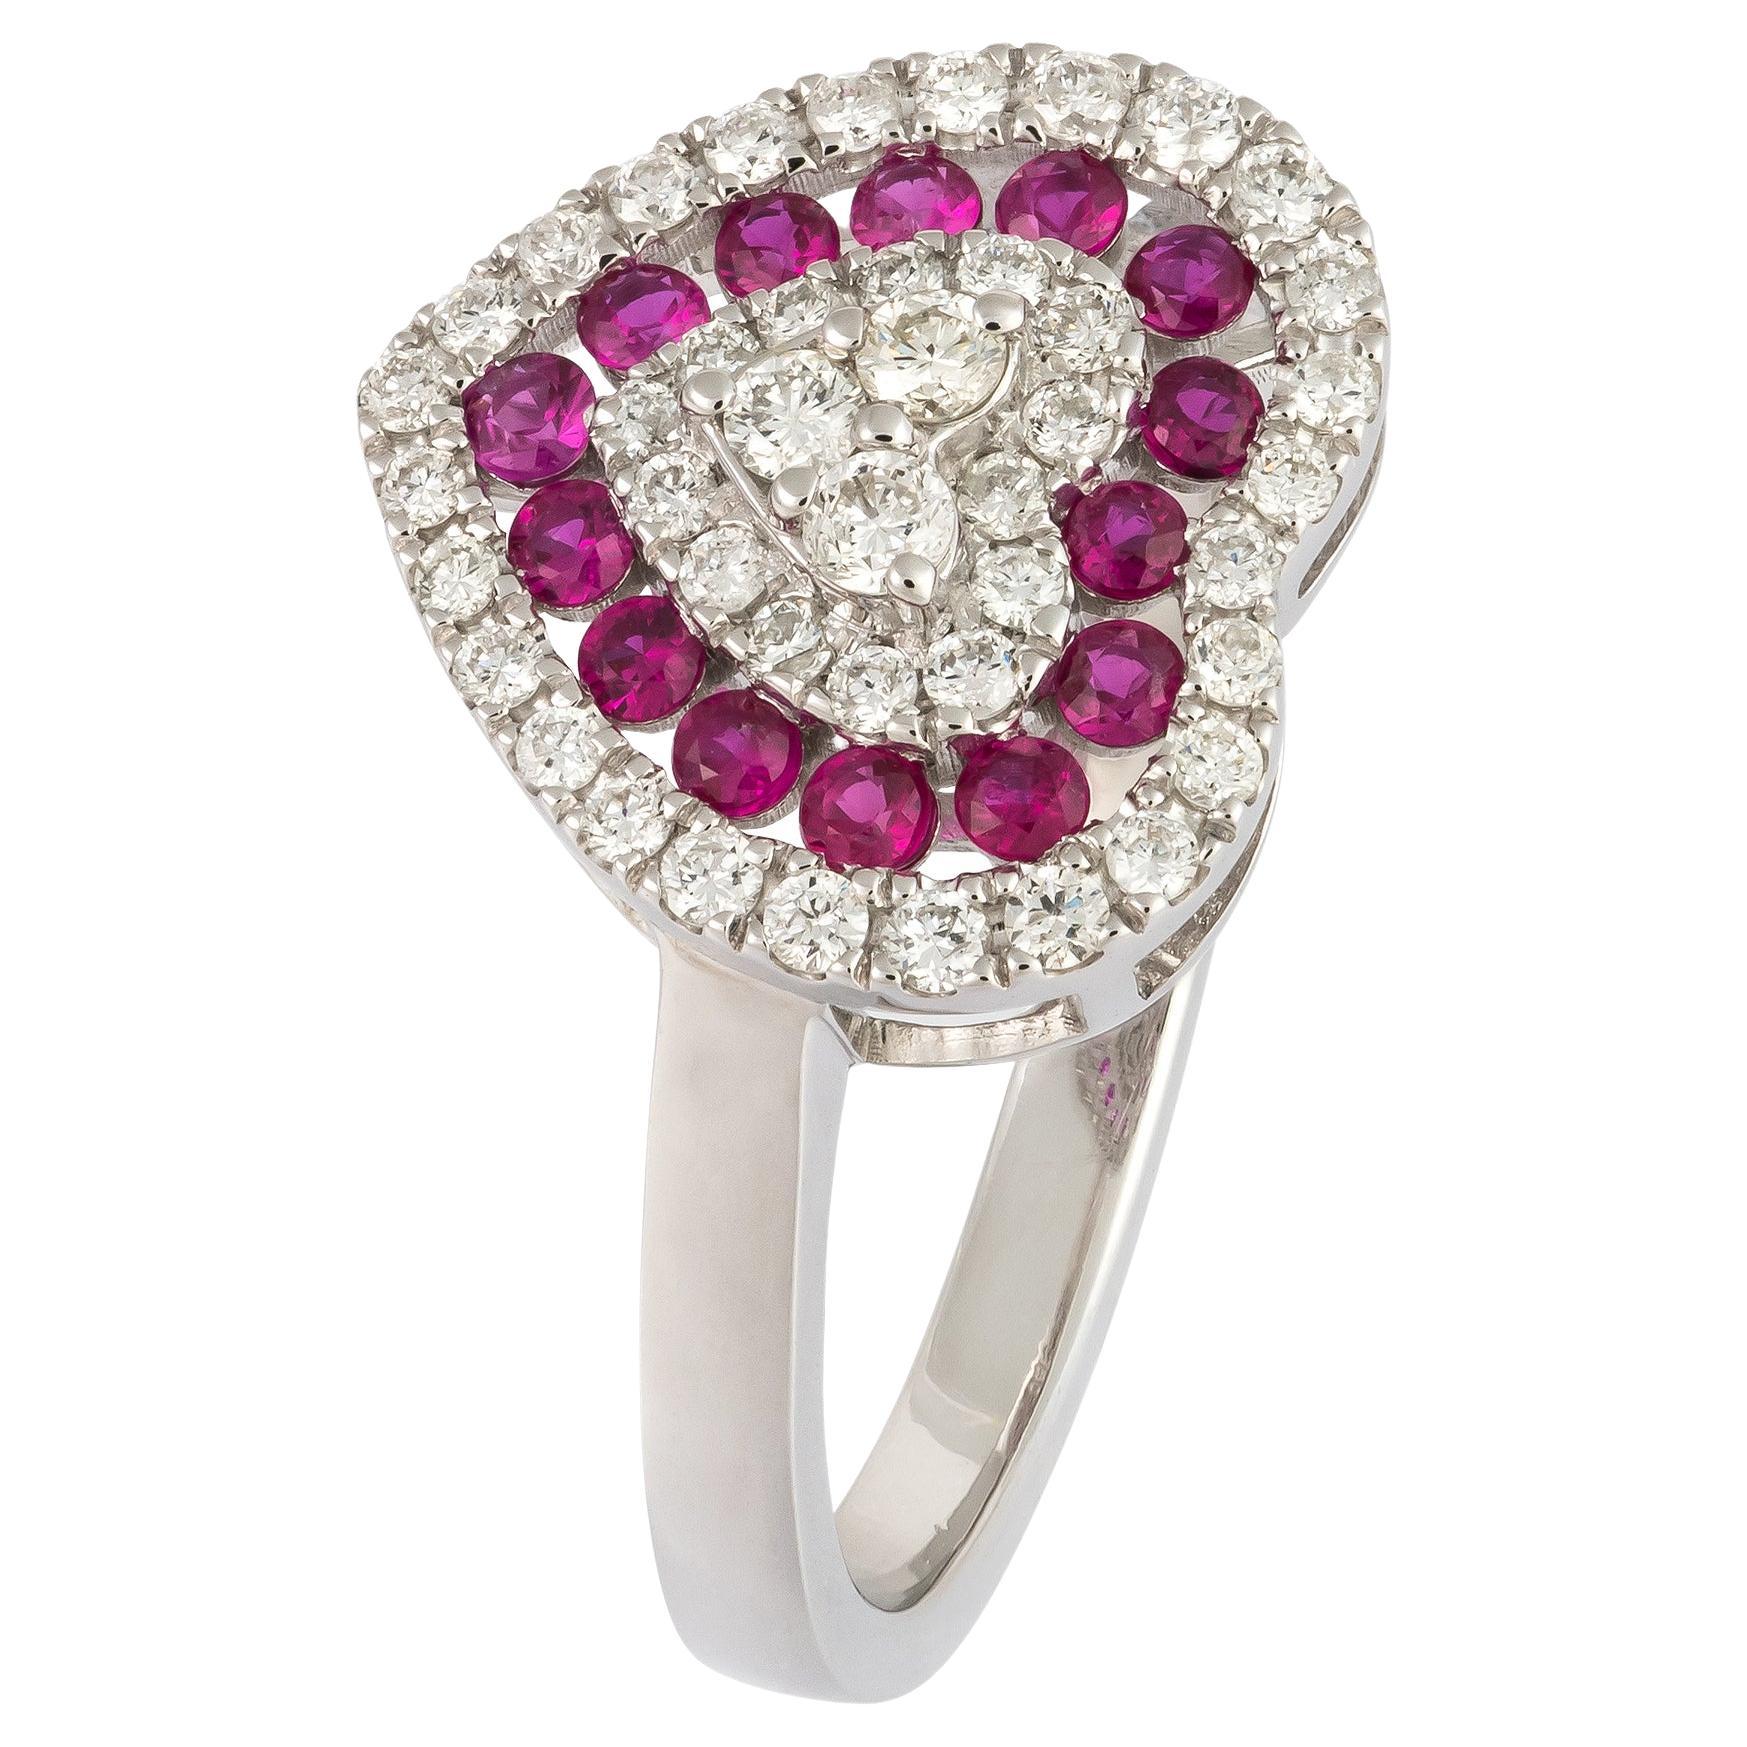 For Sale:  Impressive Ruby White 18K Gold White Diamond Ring for Her